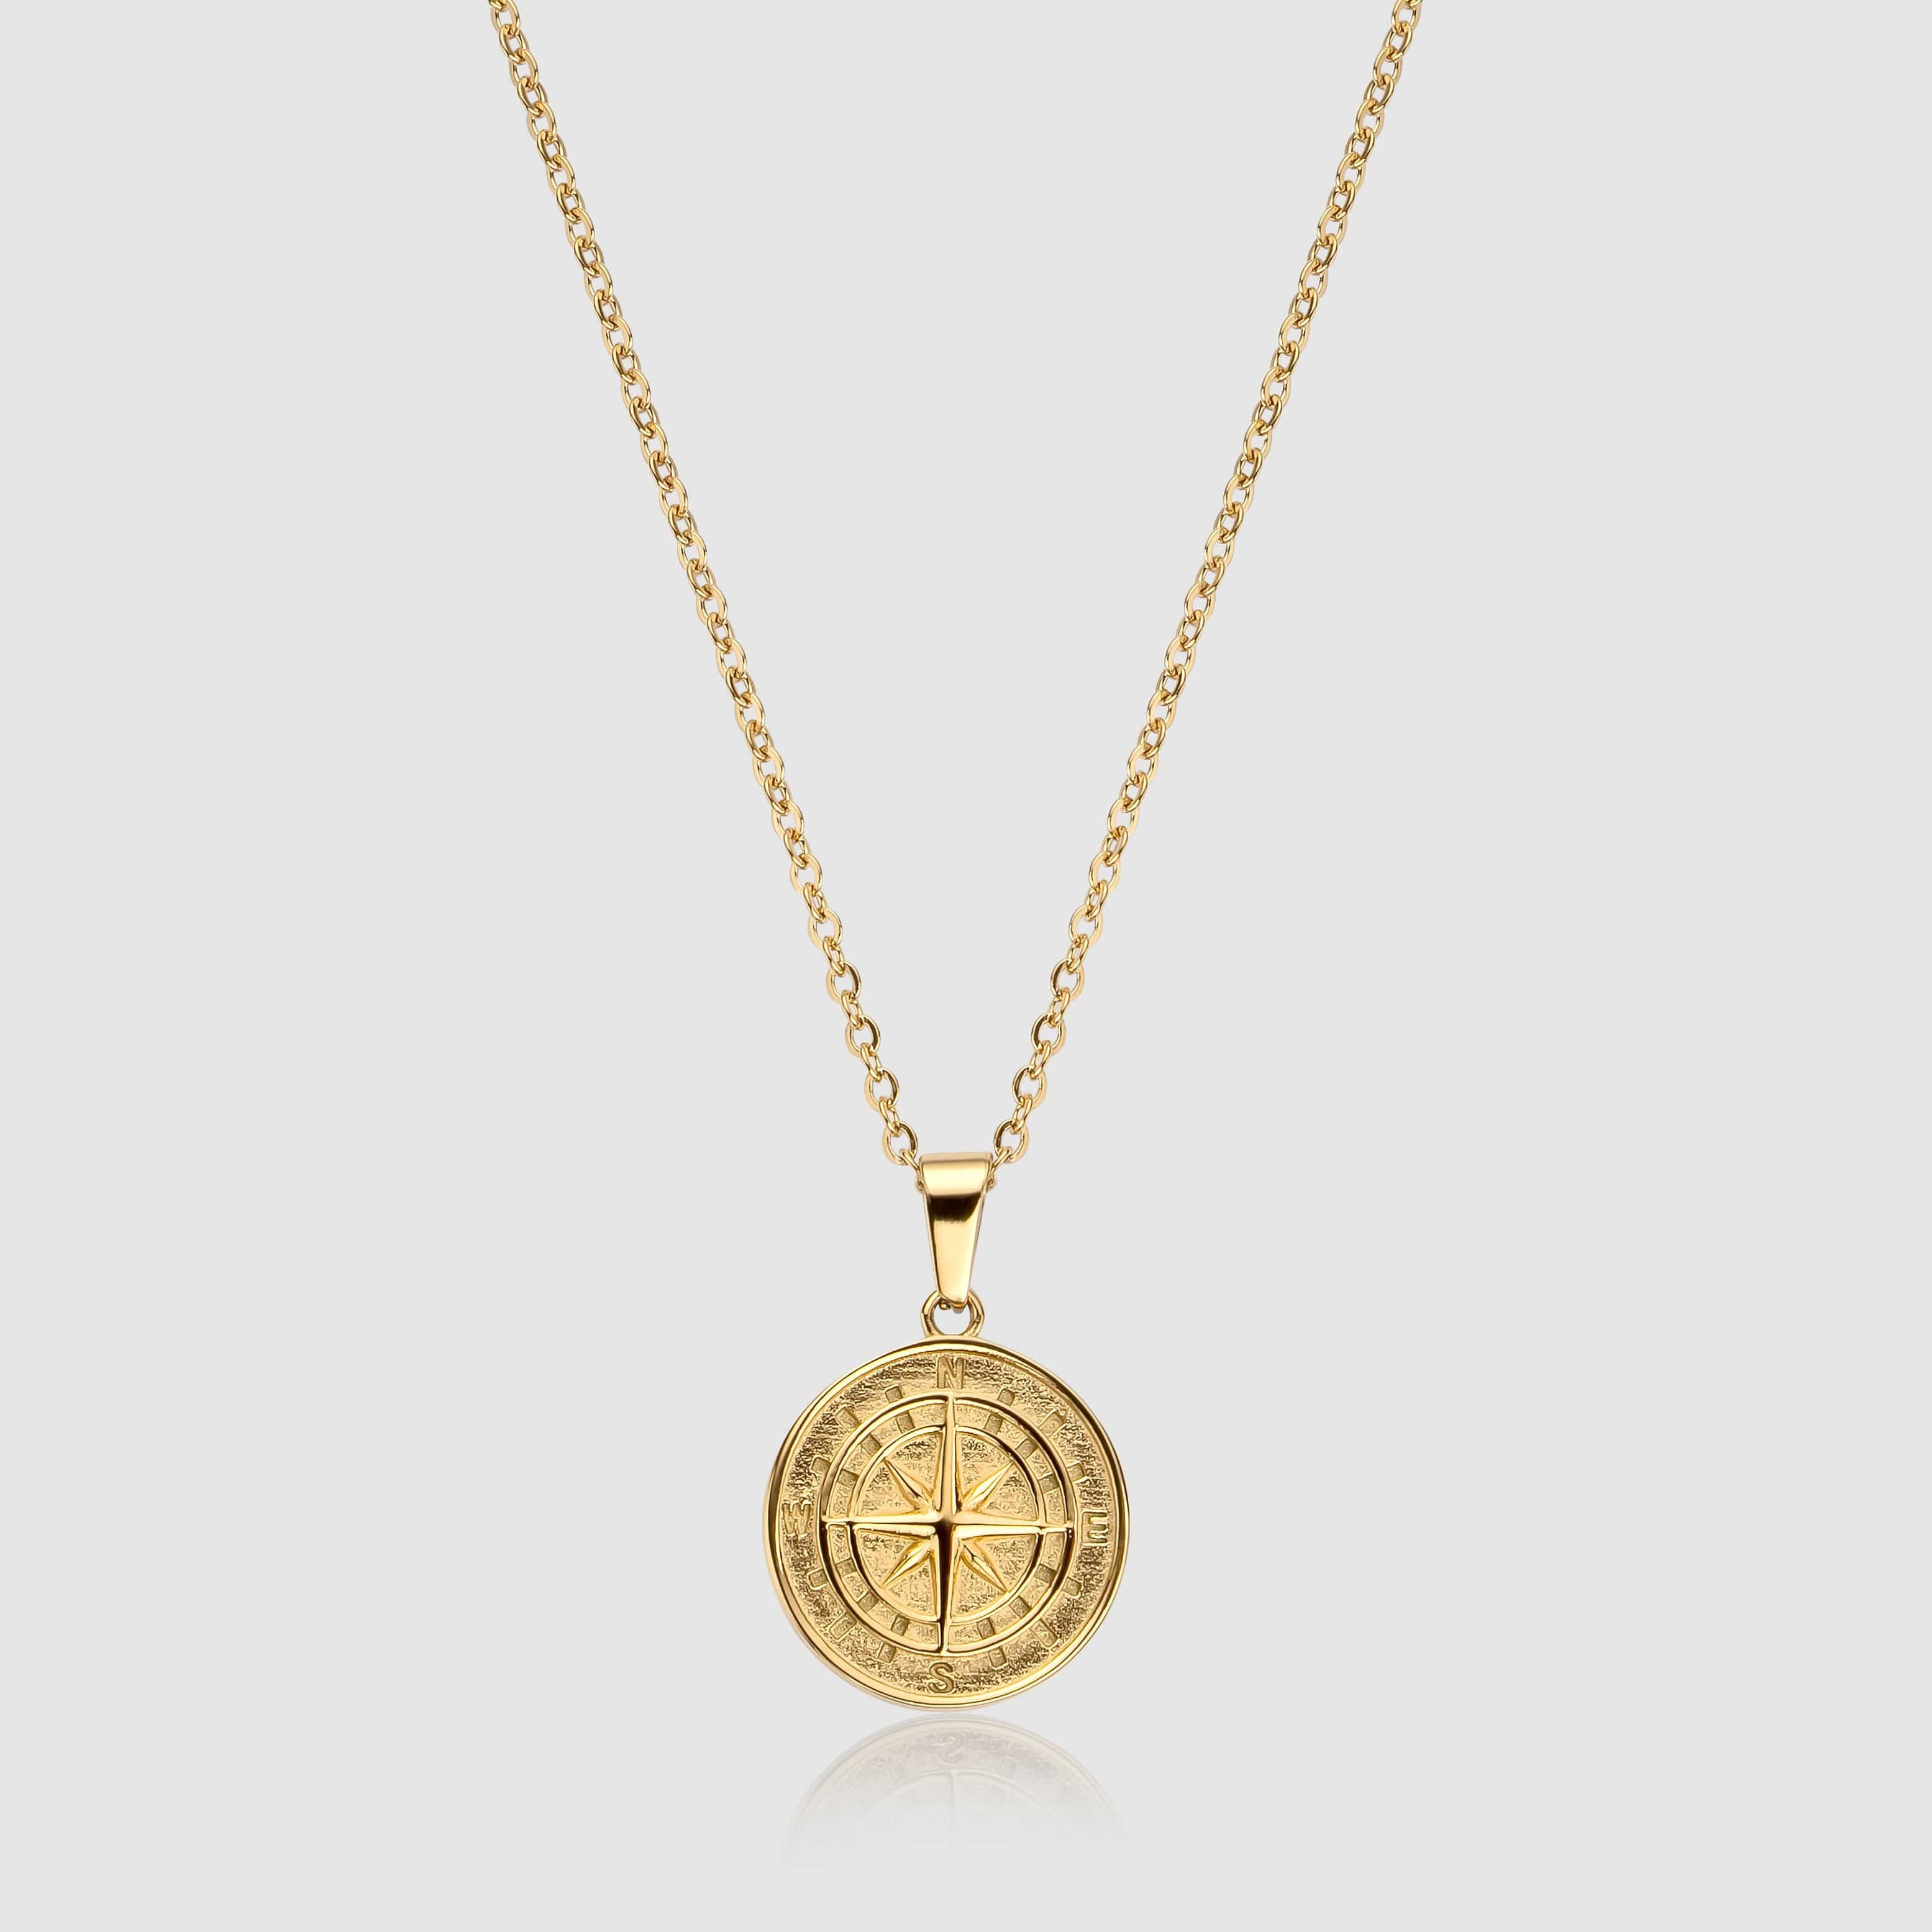 Gold Compass Necklace Pendant